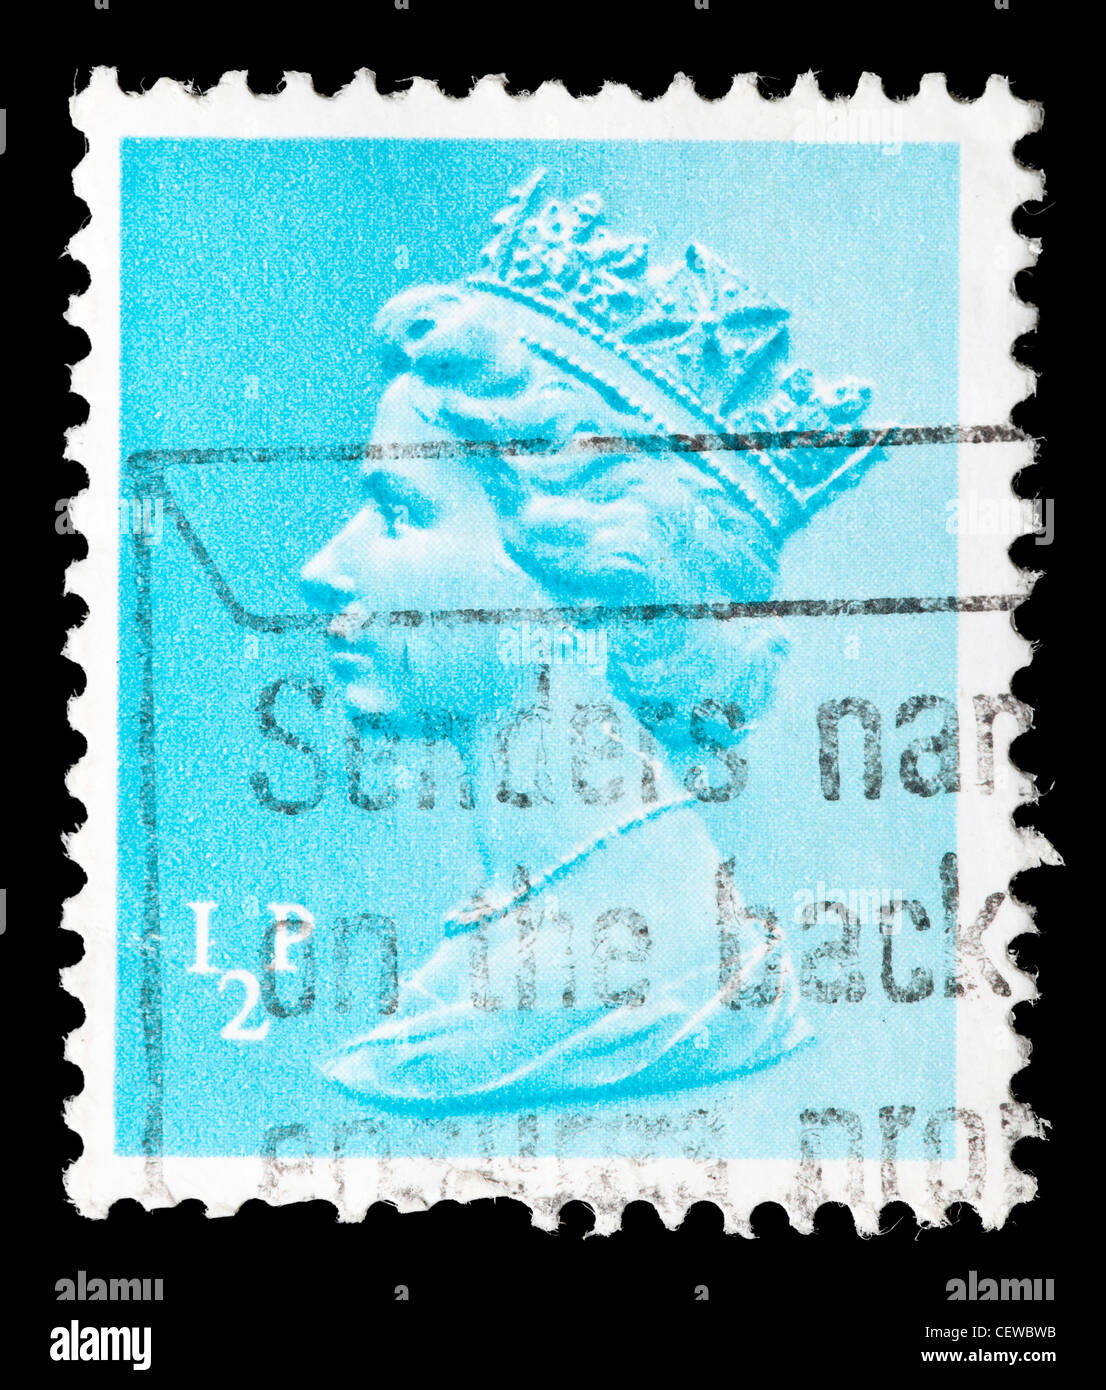 Reino Unido 1/2 peniques estampilla postal con un retrato de la Reina Isabel II., circa 1977 Foto de stock